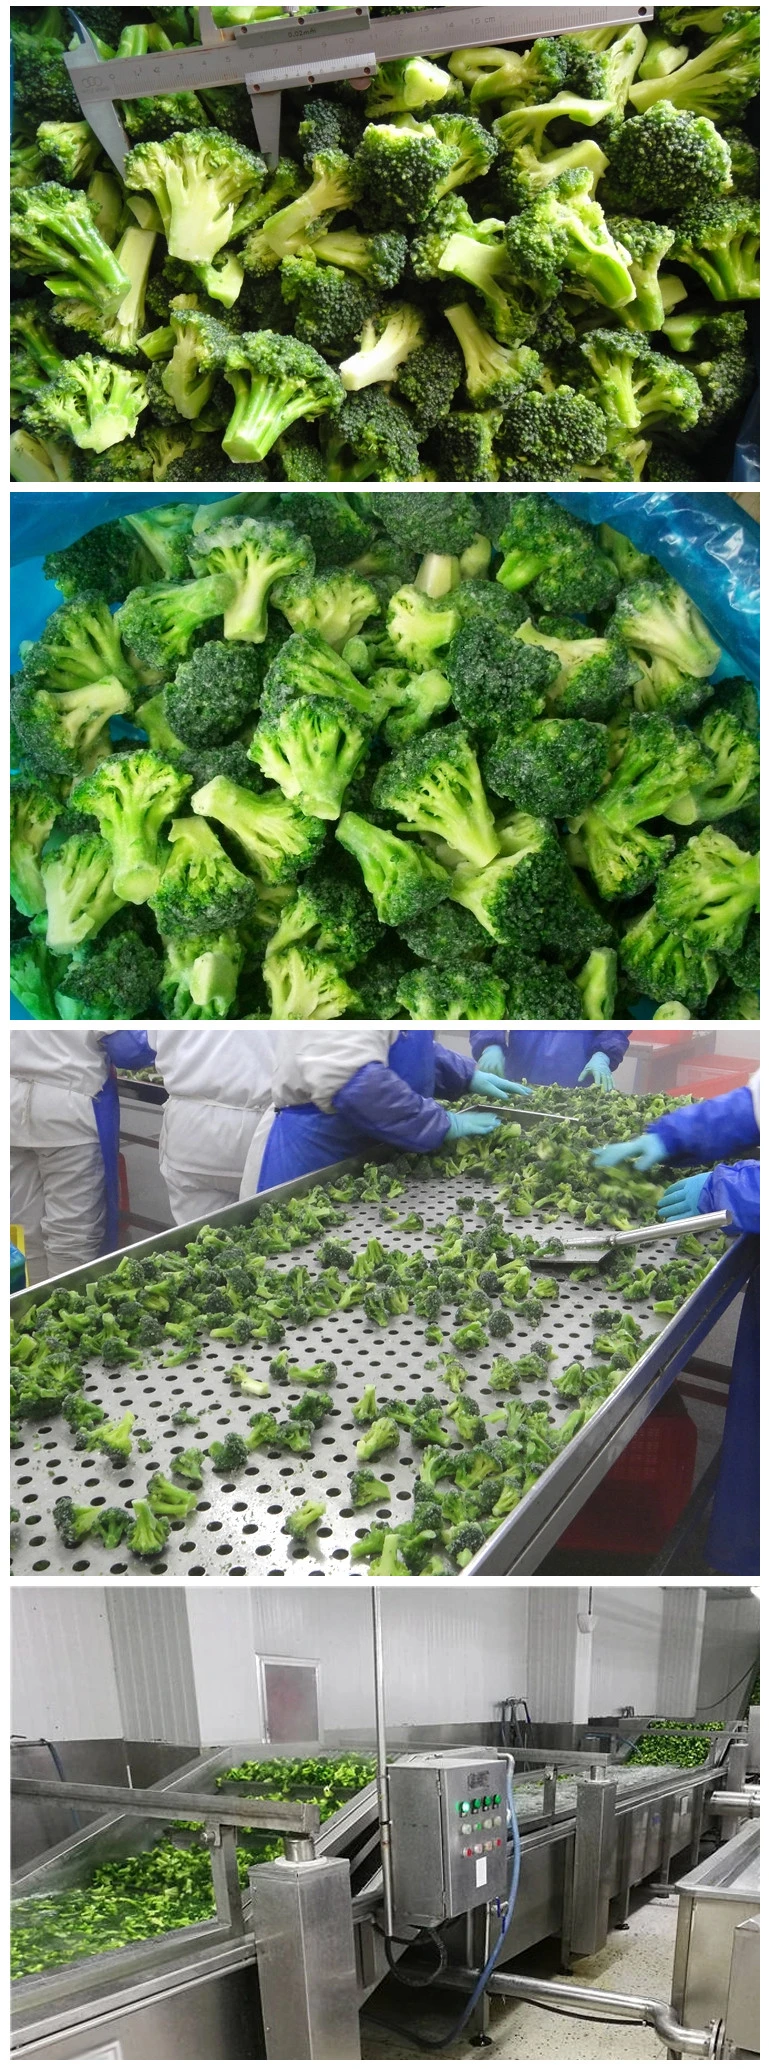 Frozen Broccoli Frozen Broccoli Supplier Grade a Export Wholesale High Quality Organic IQF Frozen Fresh Broccoli